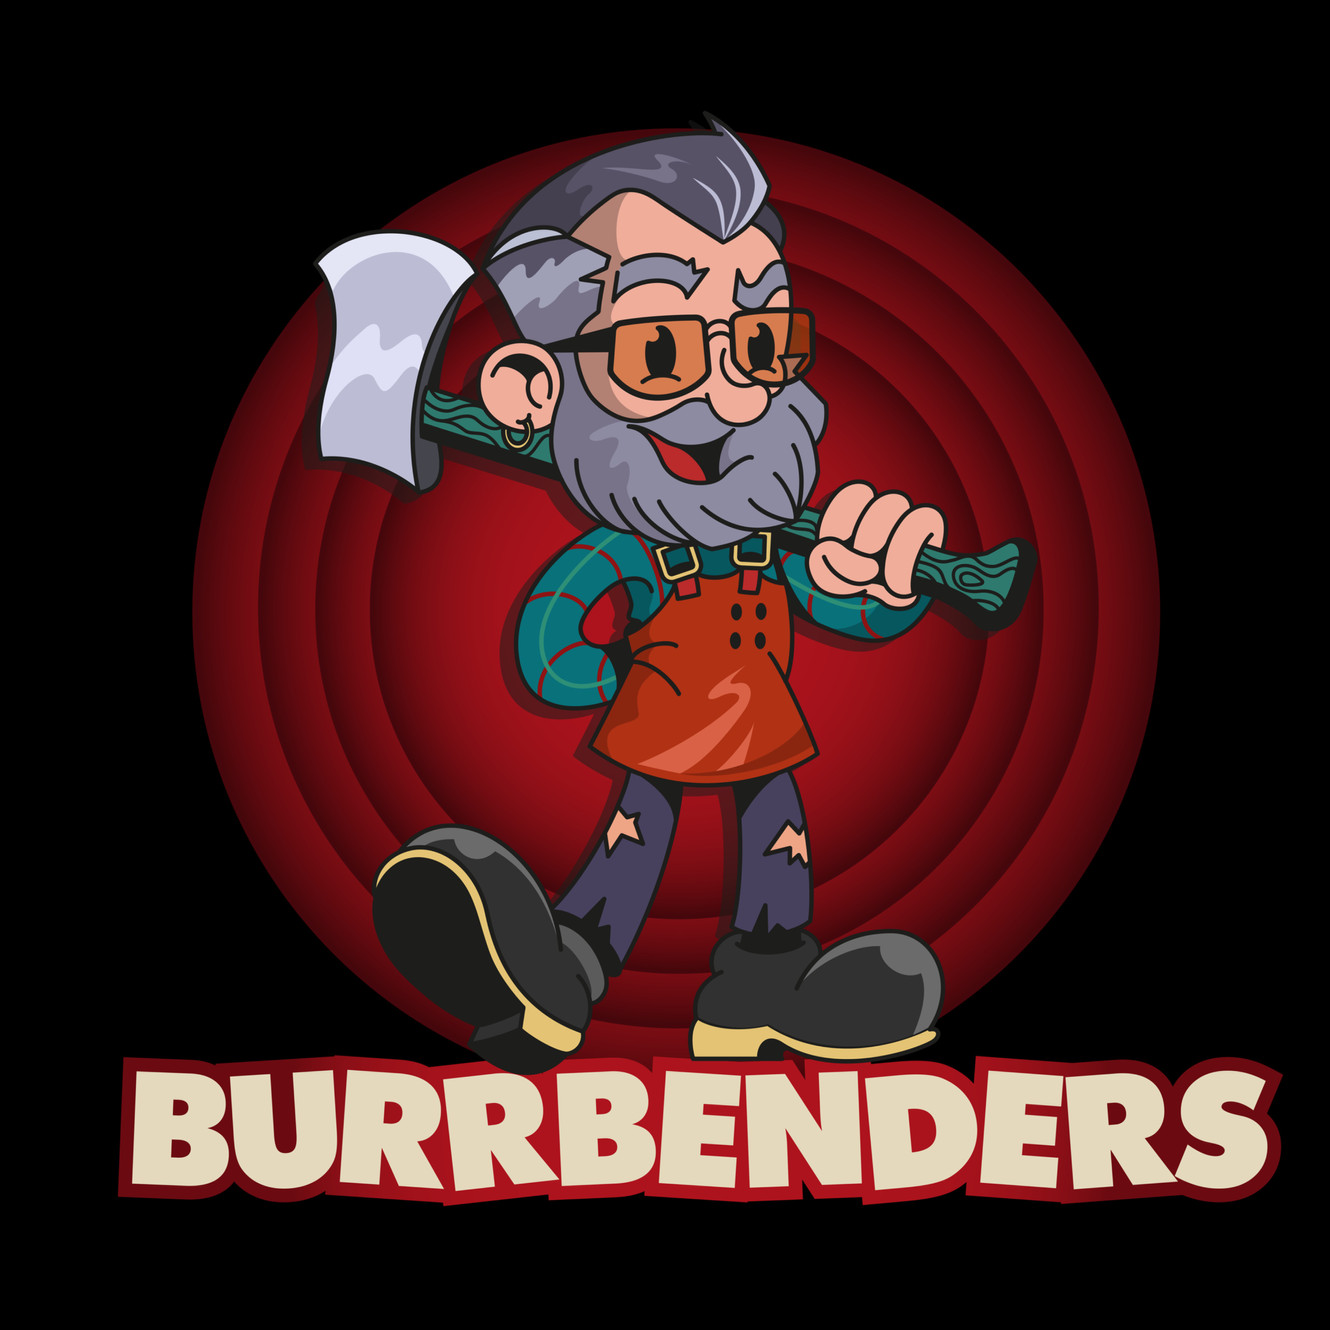 www.burrbenders.com